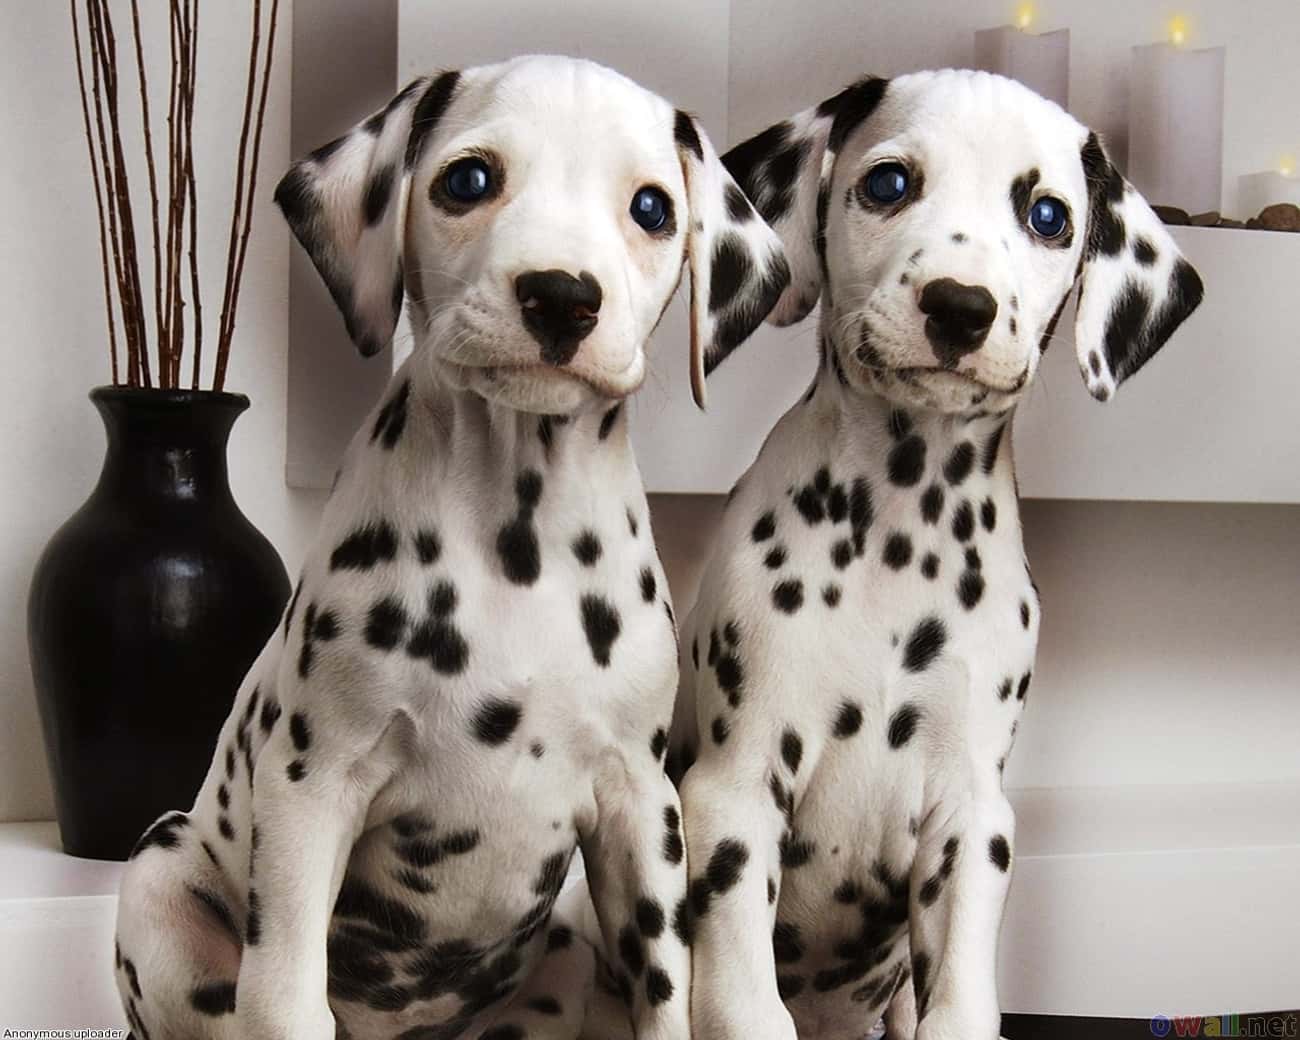 Big-eyed Puppies